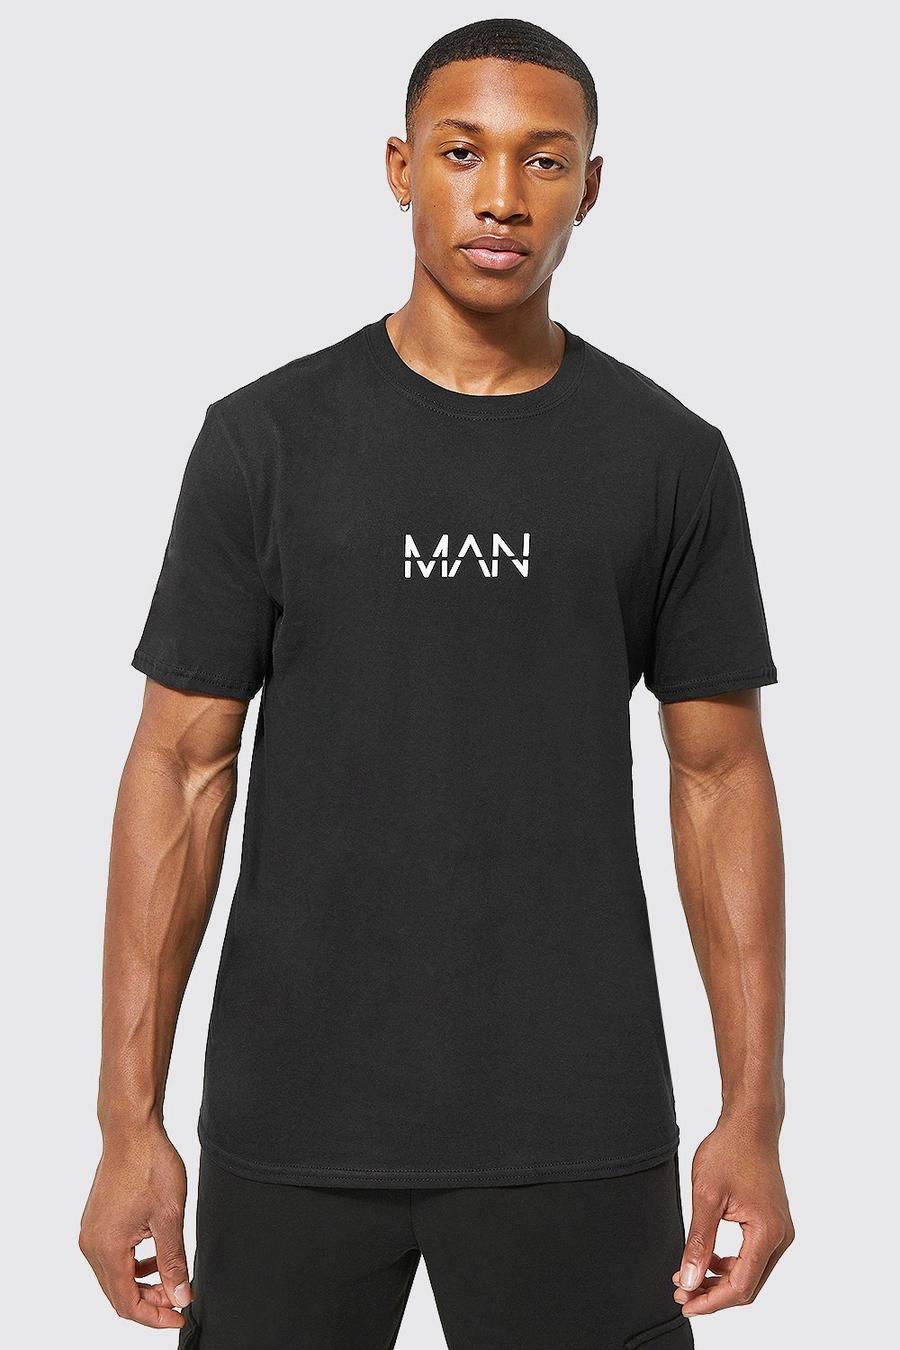 T-shirt - MAN, Black